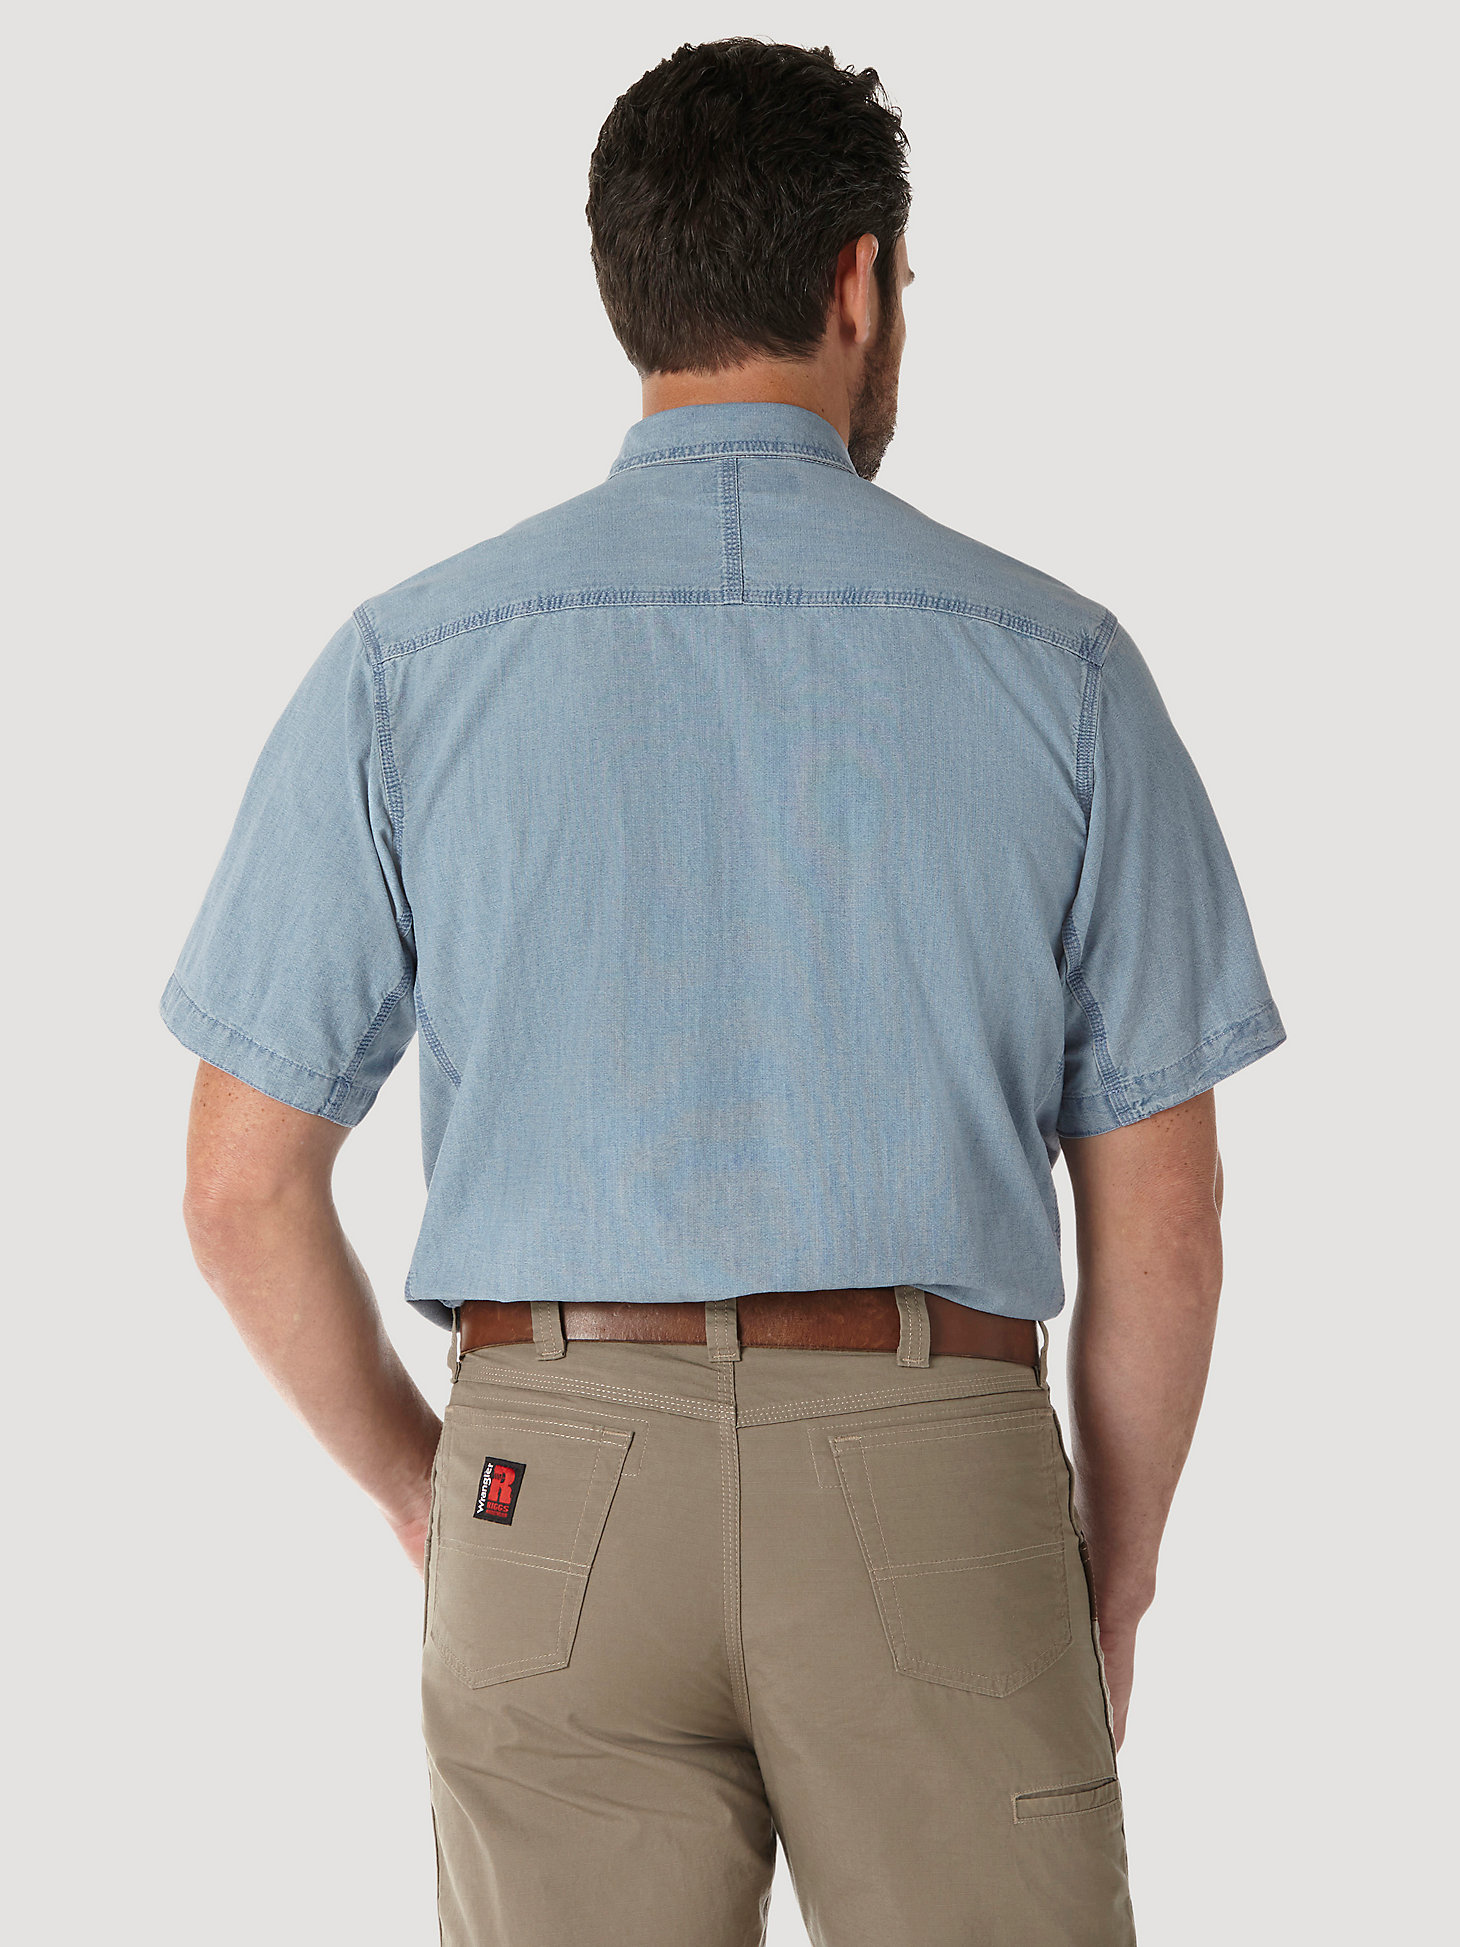 Wrangler® RIGGS Workwear® Chambray Work Shirt in Light Blue alternative view 1